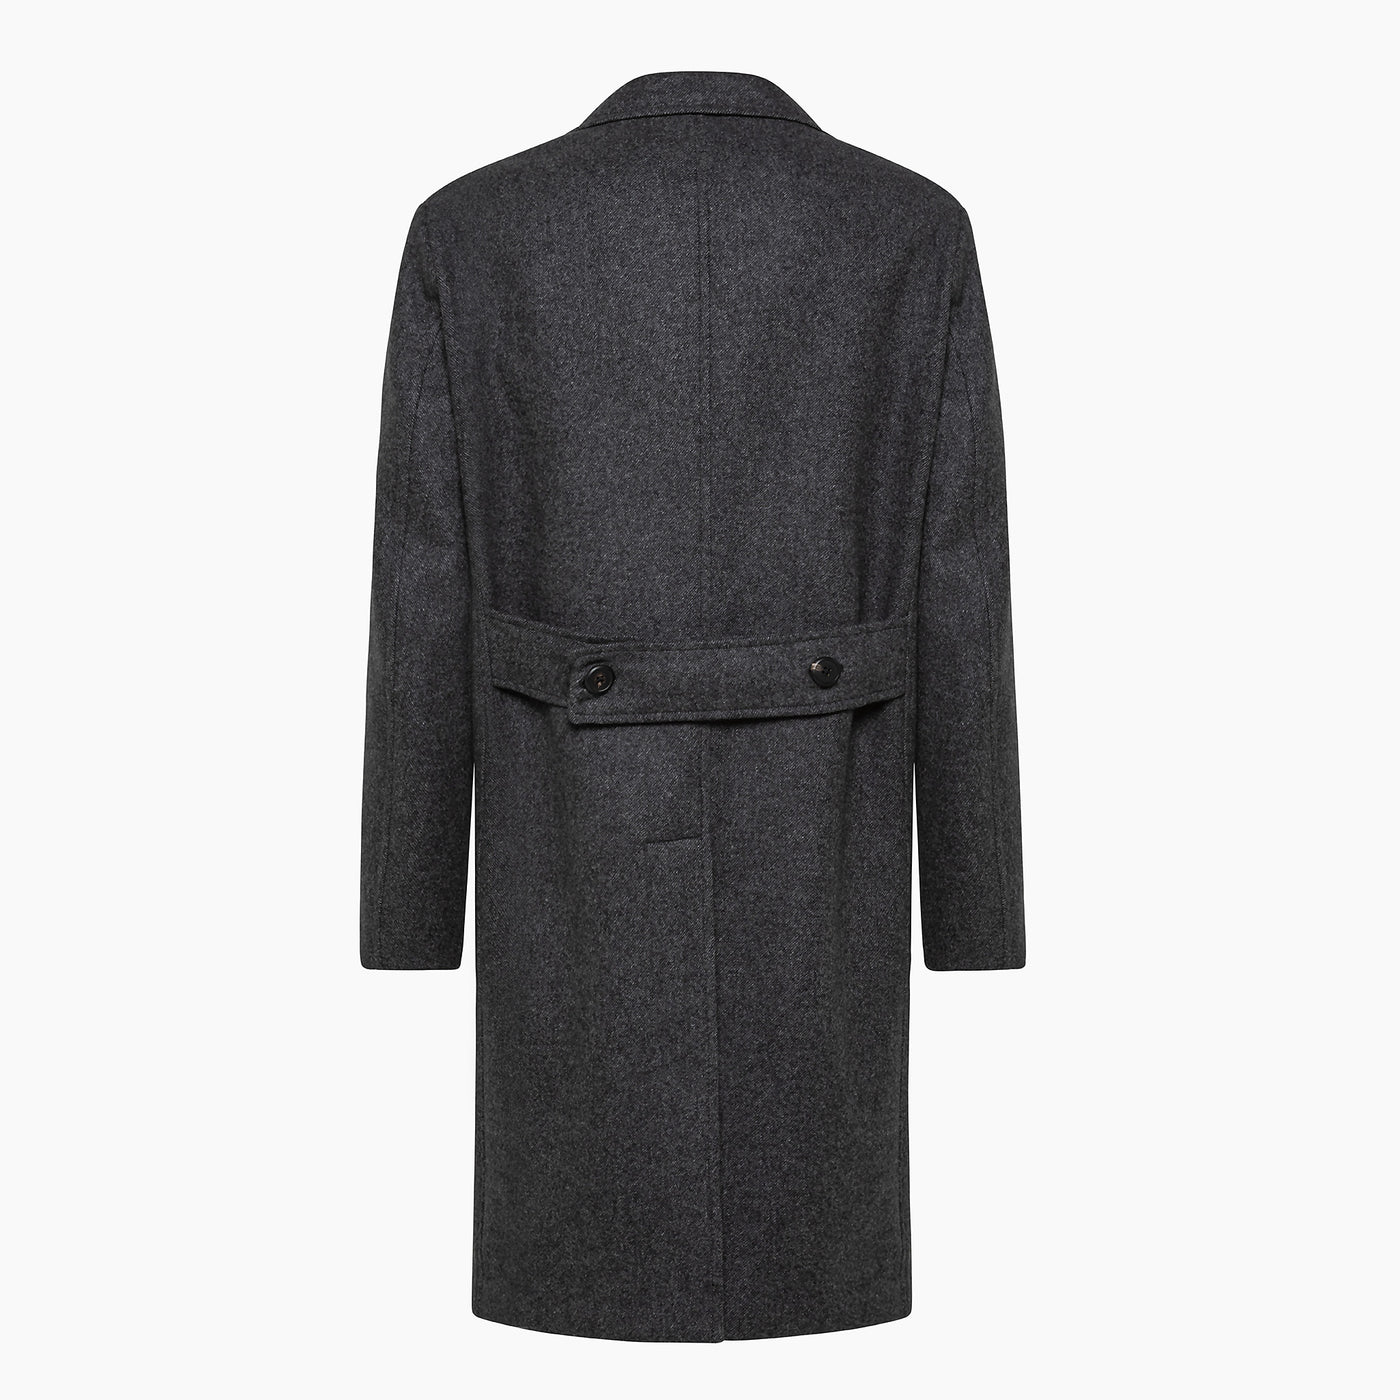 Napoleon wool and cashmere coat